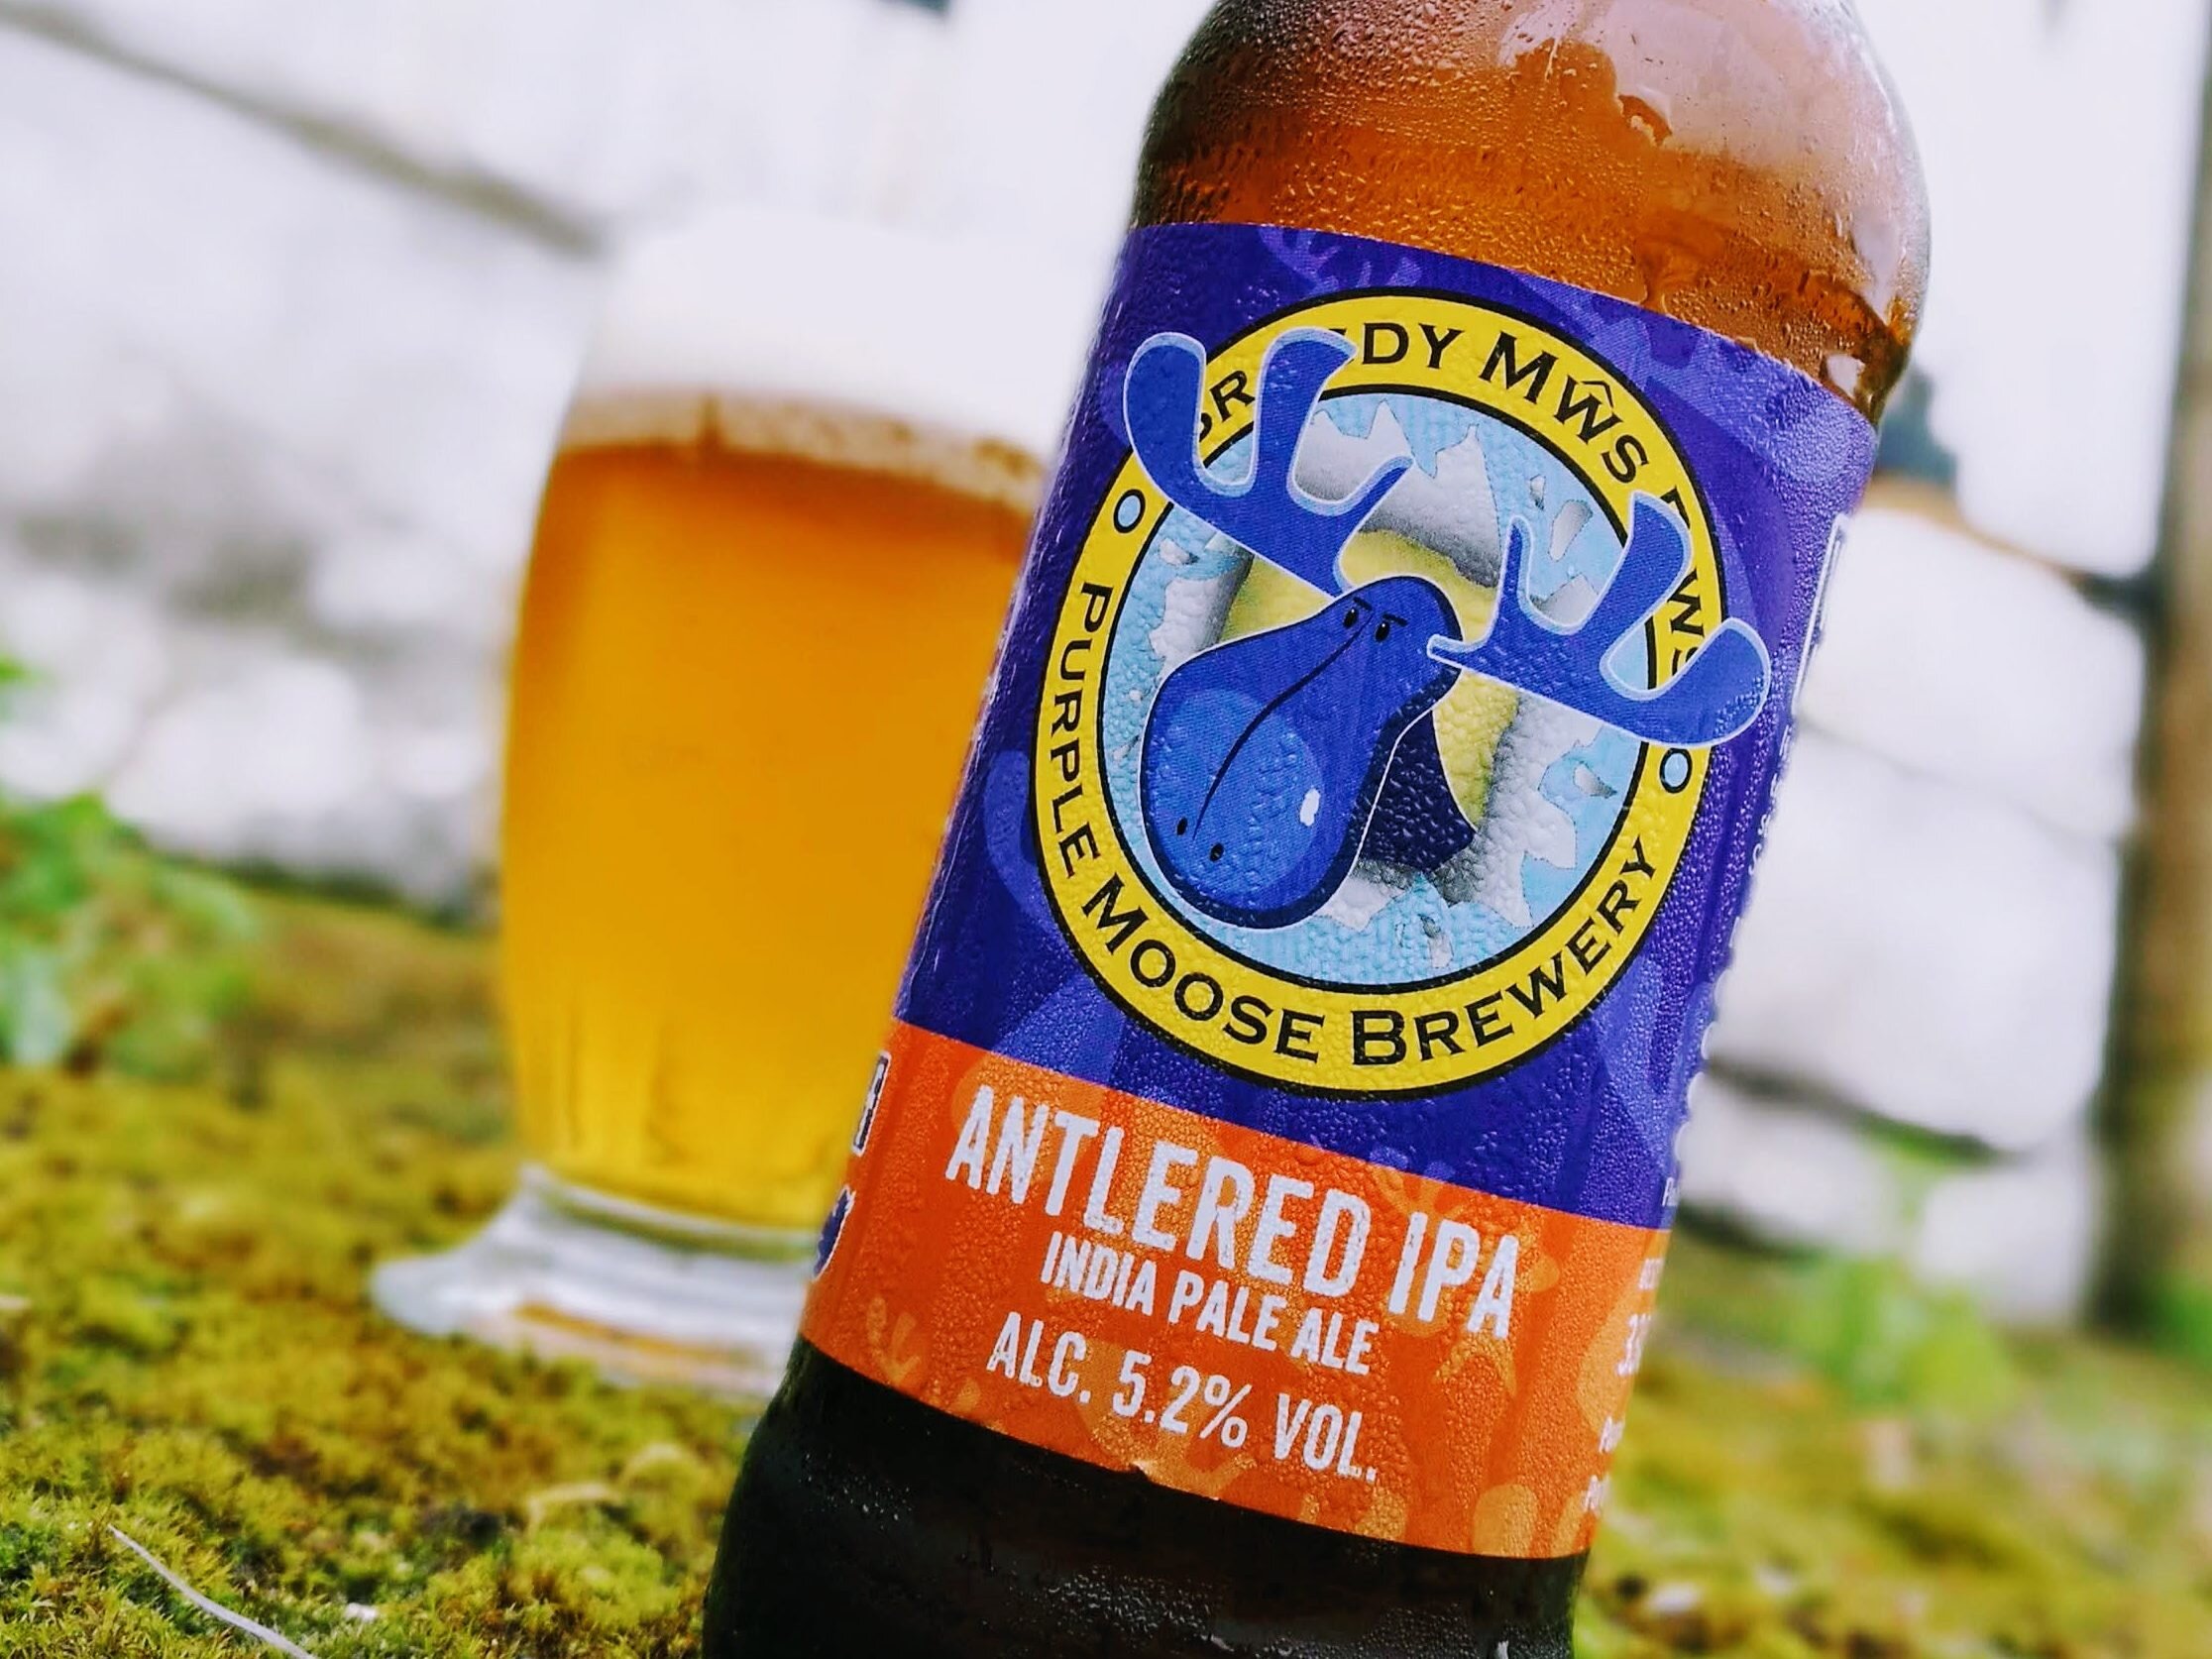 Beer Yeti review on Antlered IPA from Purple Moose brewery, top blog